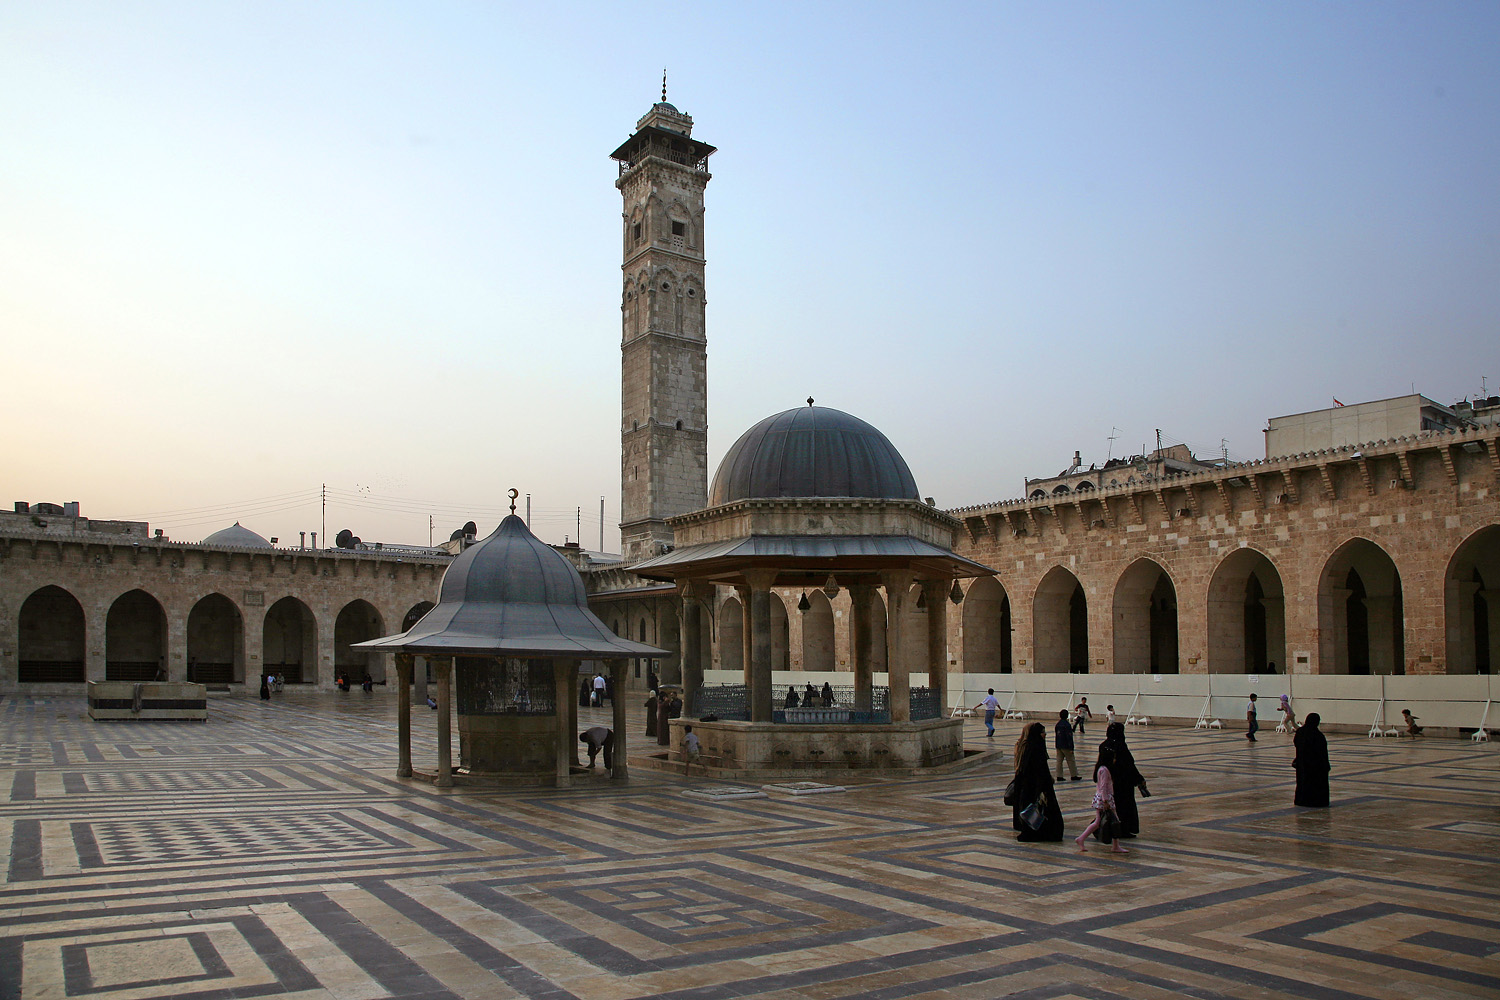 bill-hocker-courtyard-umayyad-mosque-(destroyed-in-2013)-aleppo-syria-2008